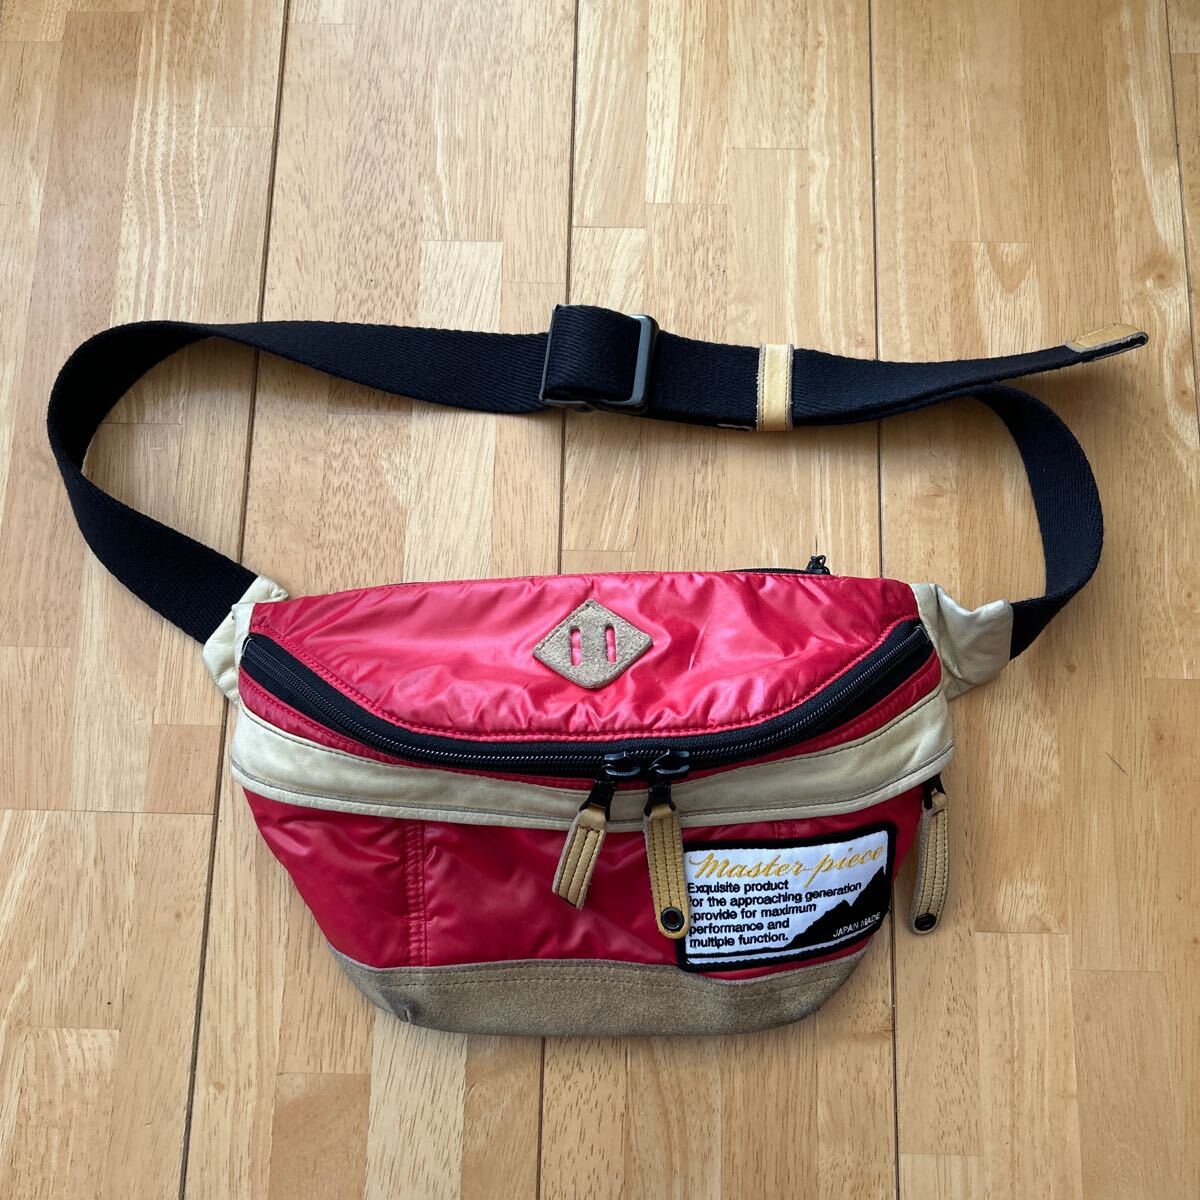 MASTAER PIECE master-piece waist bag red secondhand goods free shipping 